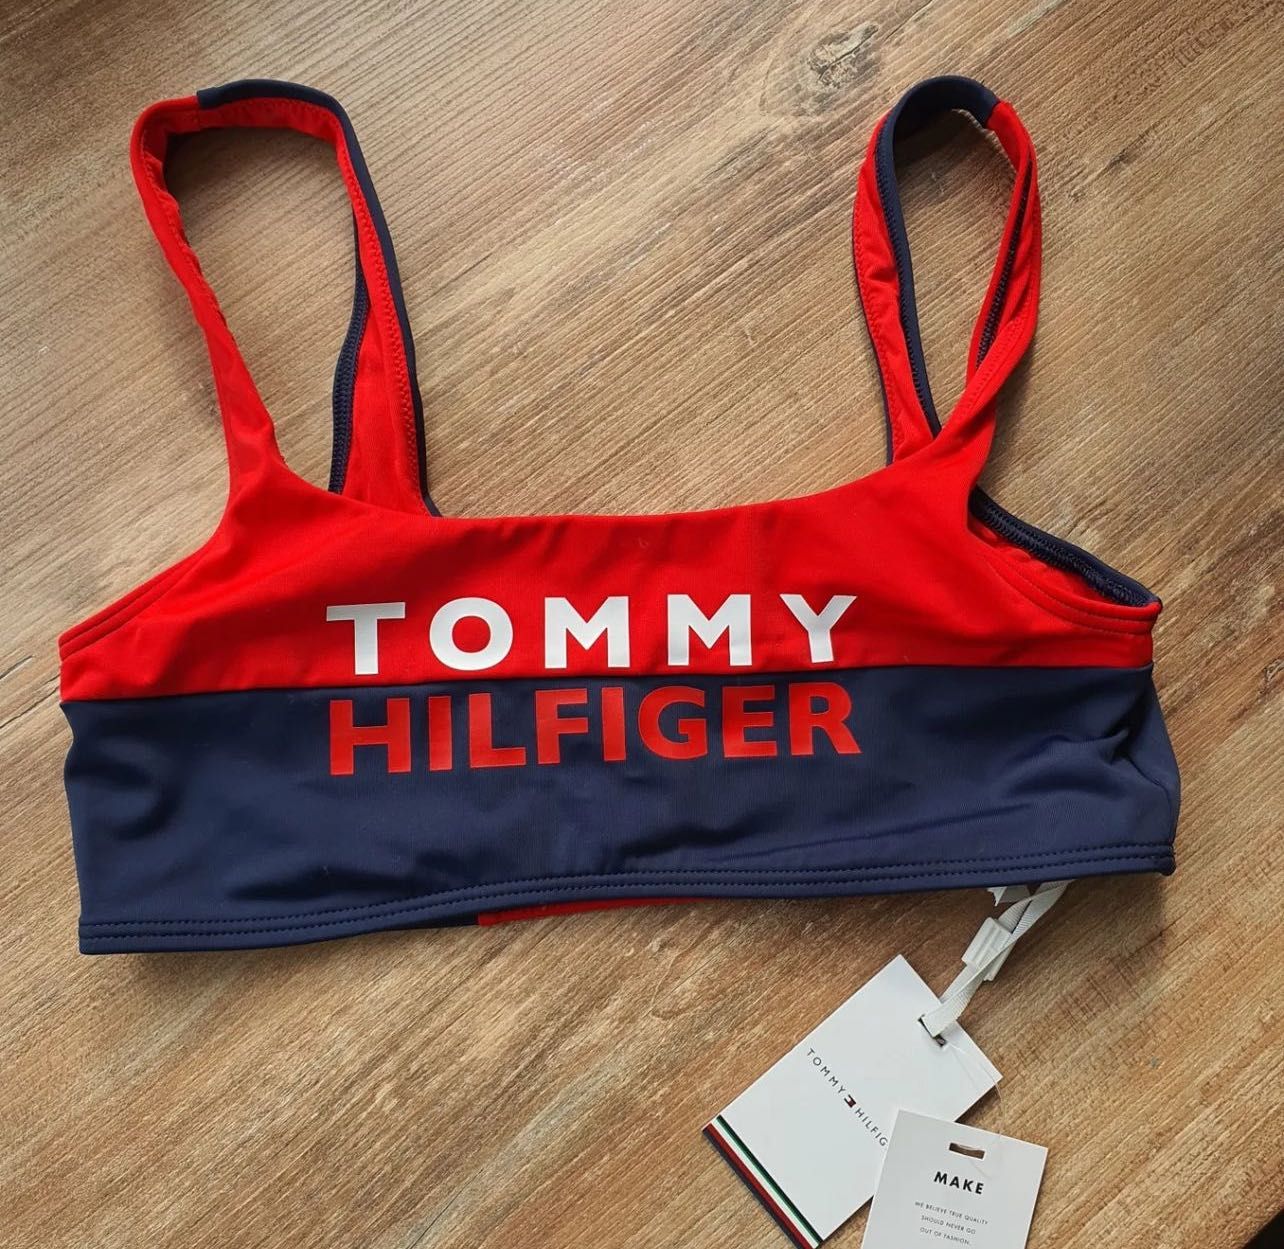 Top Tommy Hilfiger